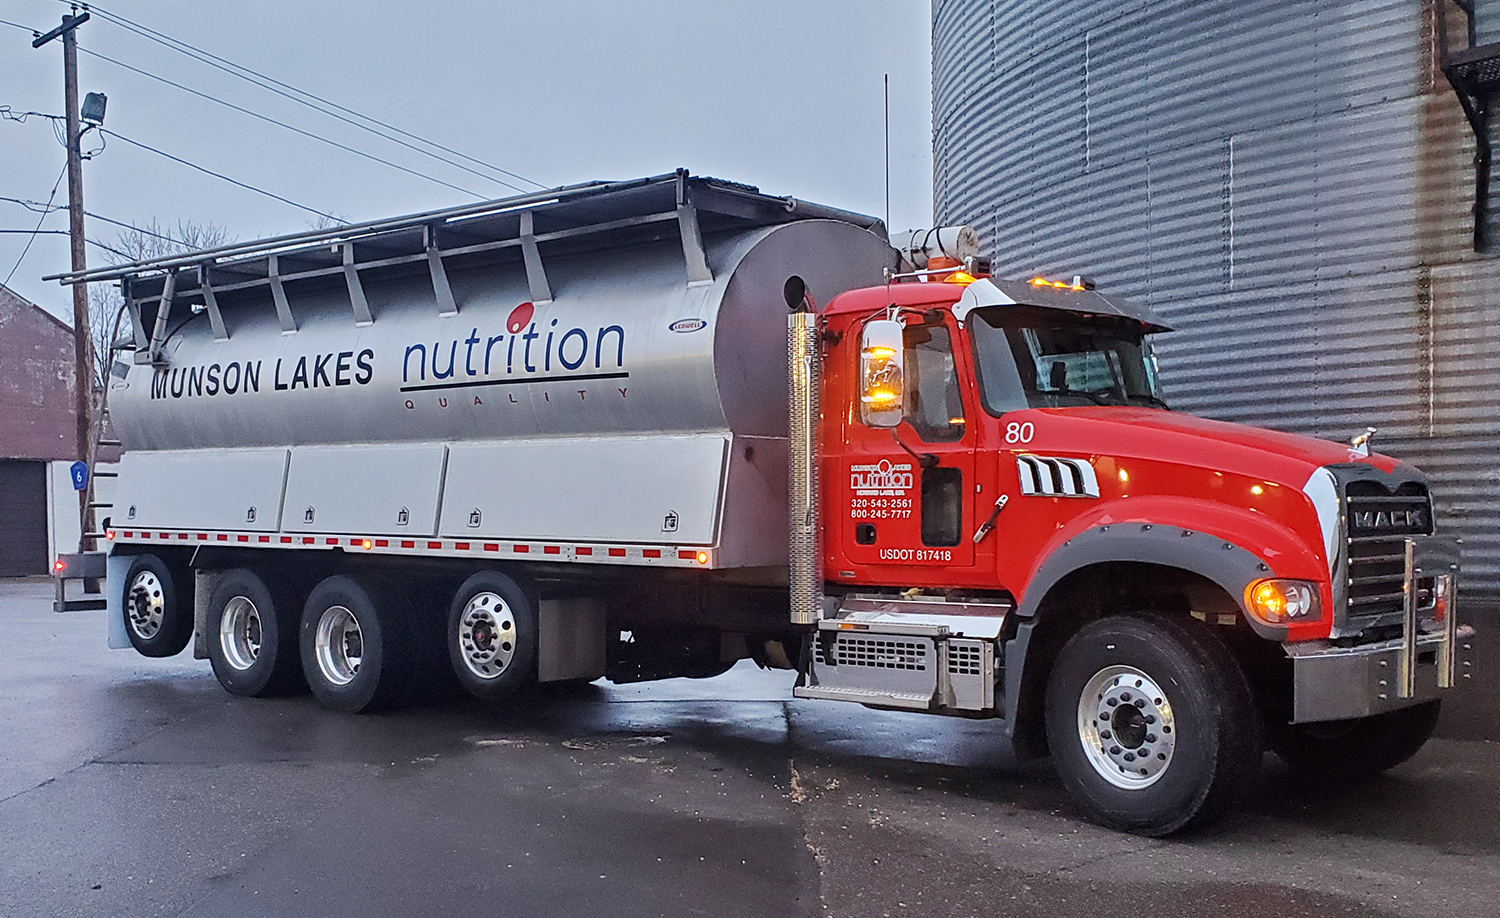 Munson Lakes feed truck